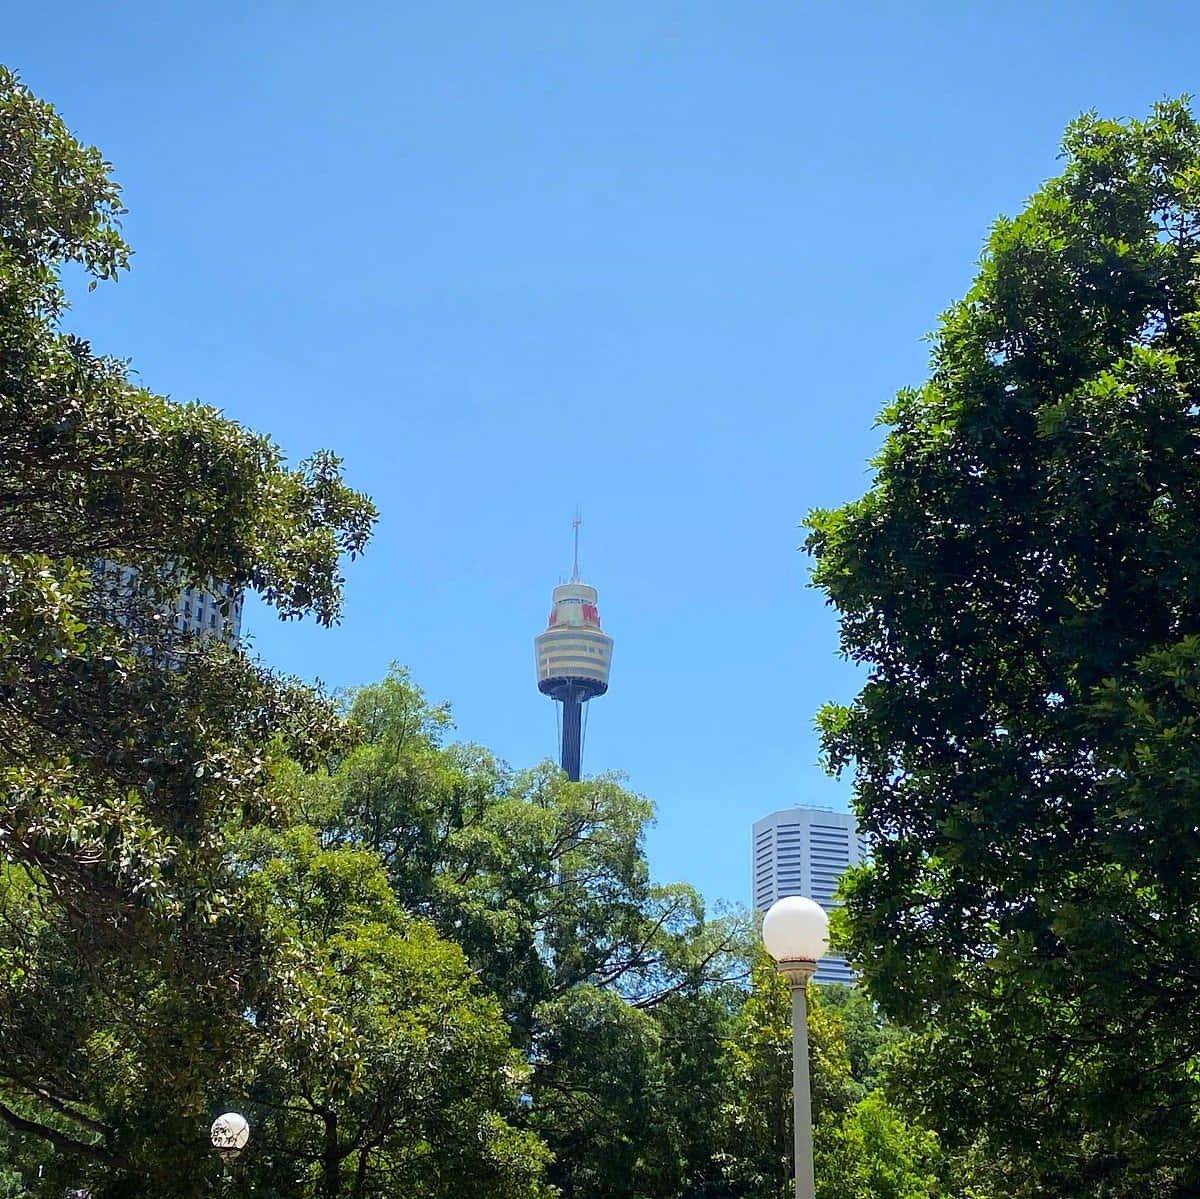 Sydney Tower Eye Peeking Through Trees.jpg Wallpaper